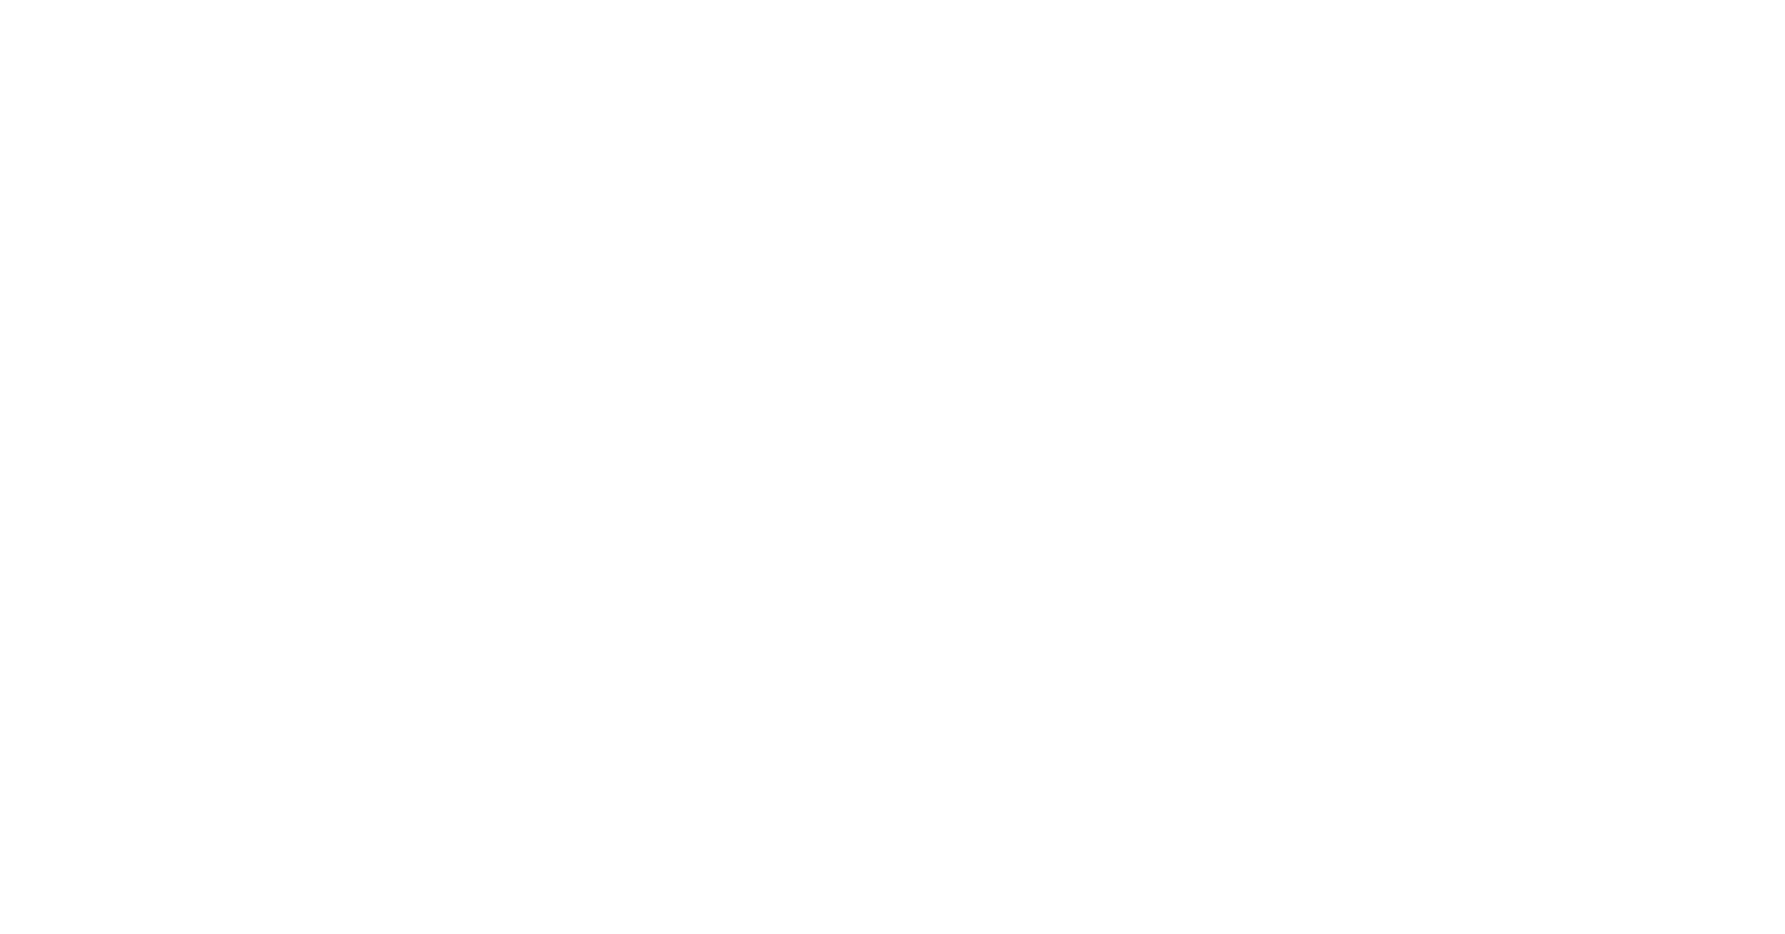 Christmas Bedtime Stories logo